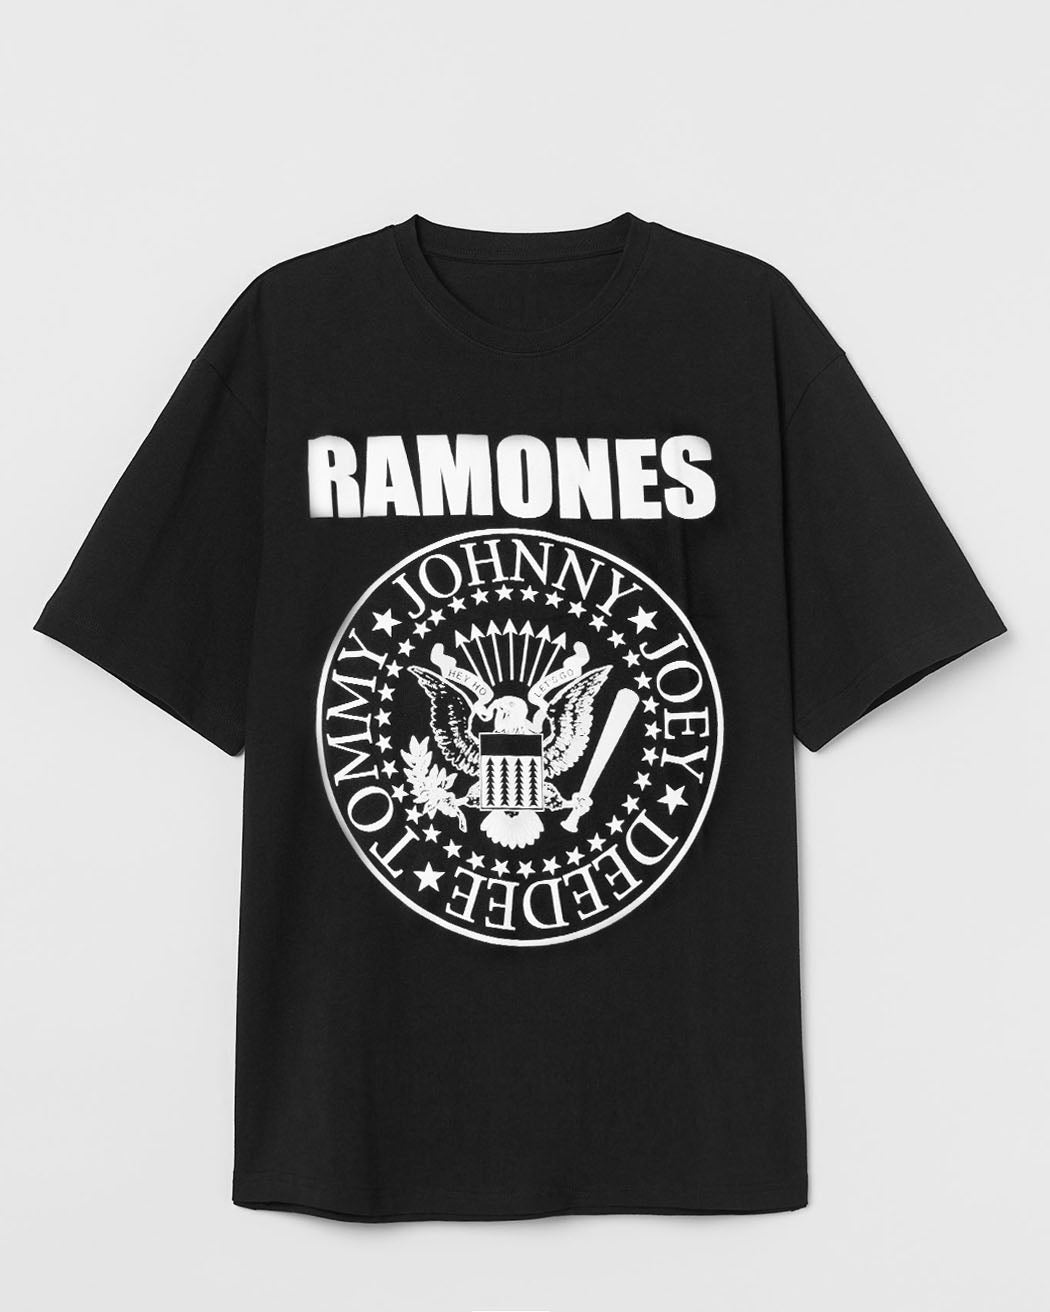 Rock Off Bandshirt, Ramones, Presidential Seal  Pick Up | Düsseldorf